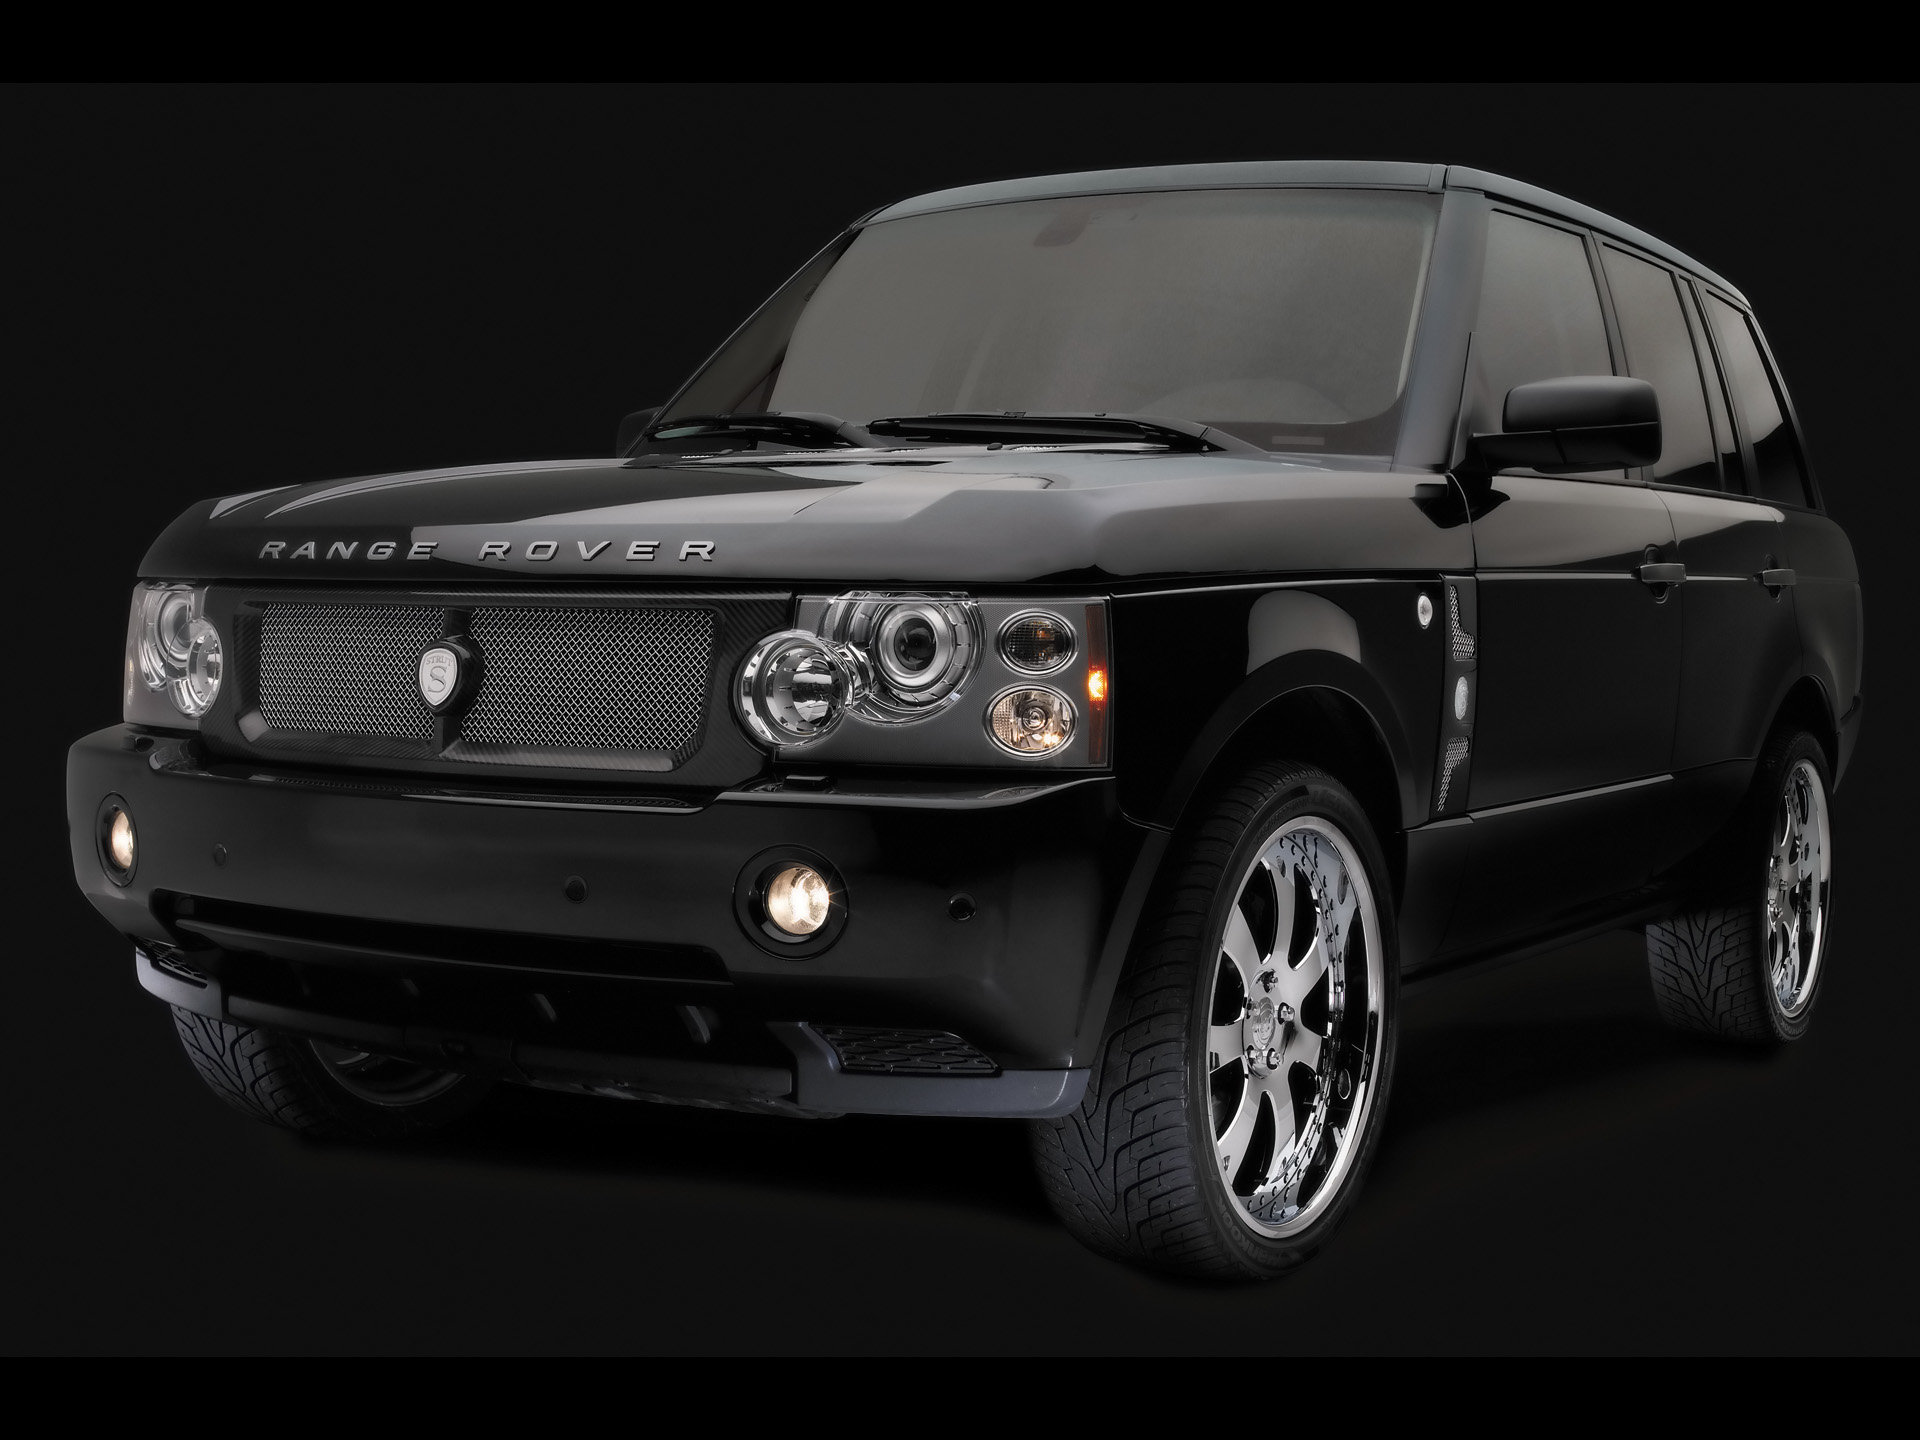 Best Land Rover Range Rover wallpaper ID:68473 for High Resolution hd 1920x1440 desktop